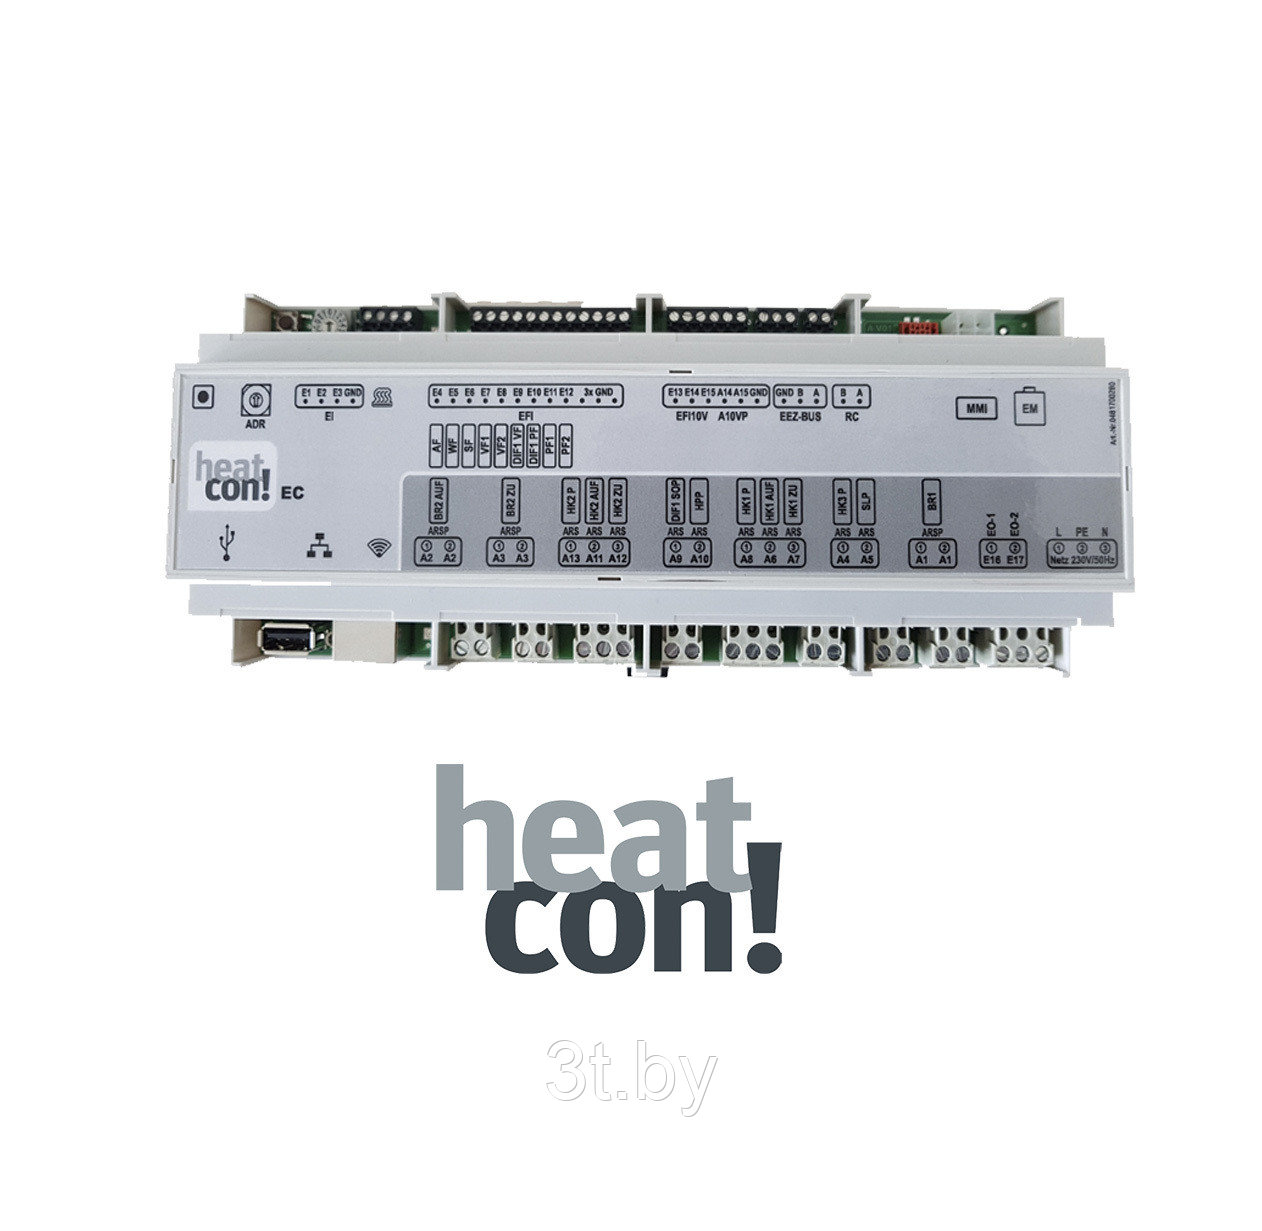 Heatcon! EC 1321 pro Open Therm